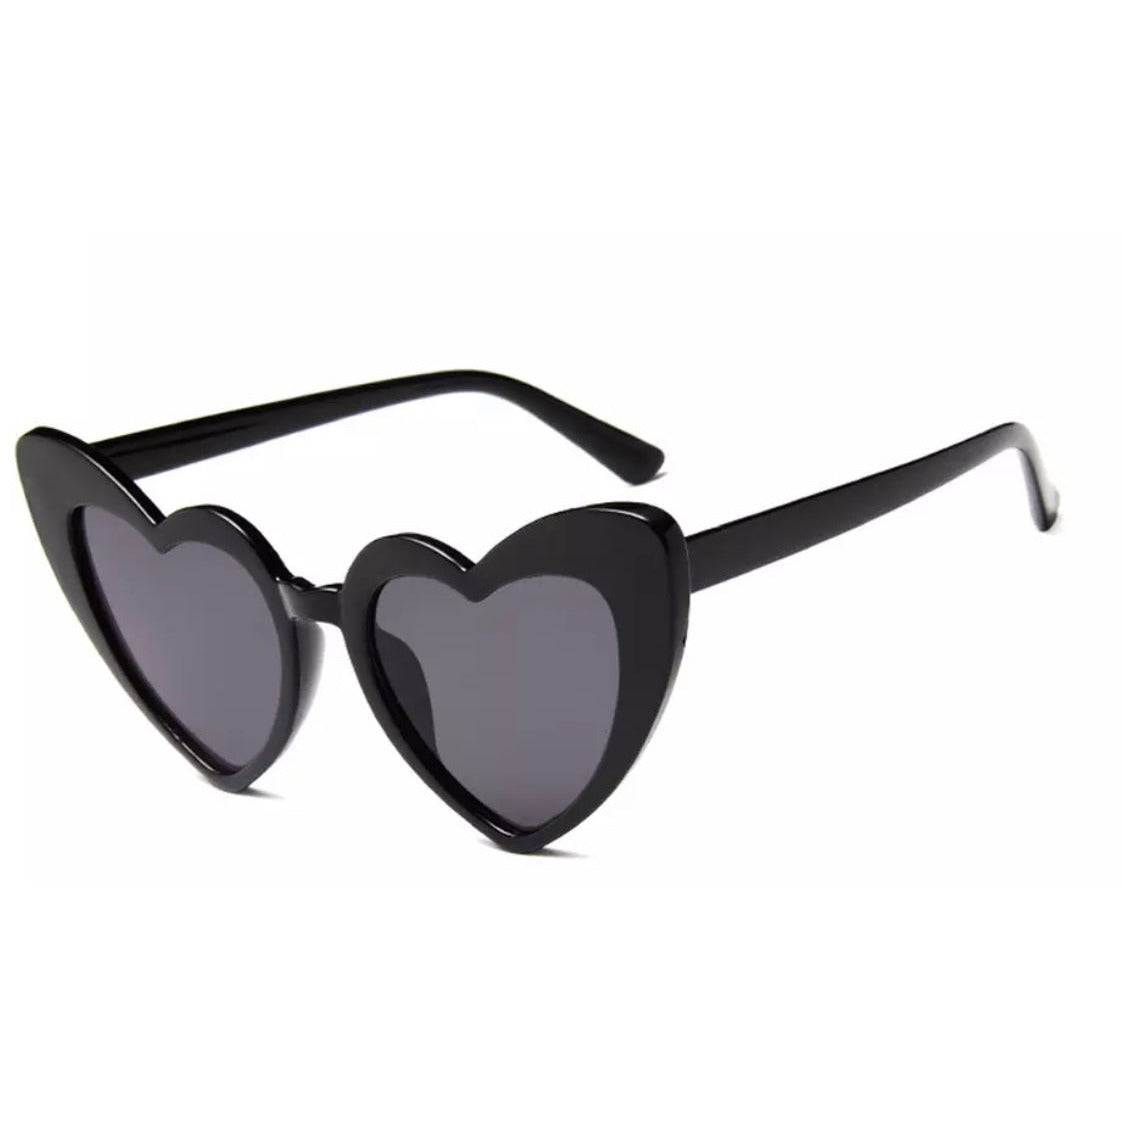 Black Heart sunglasses